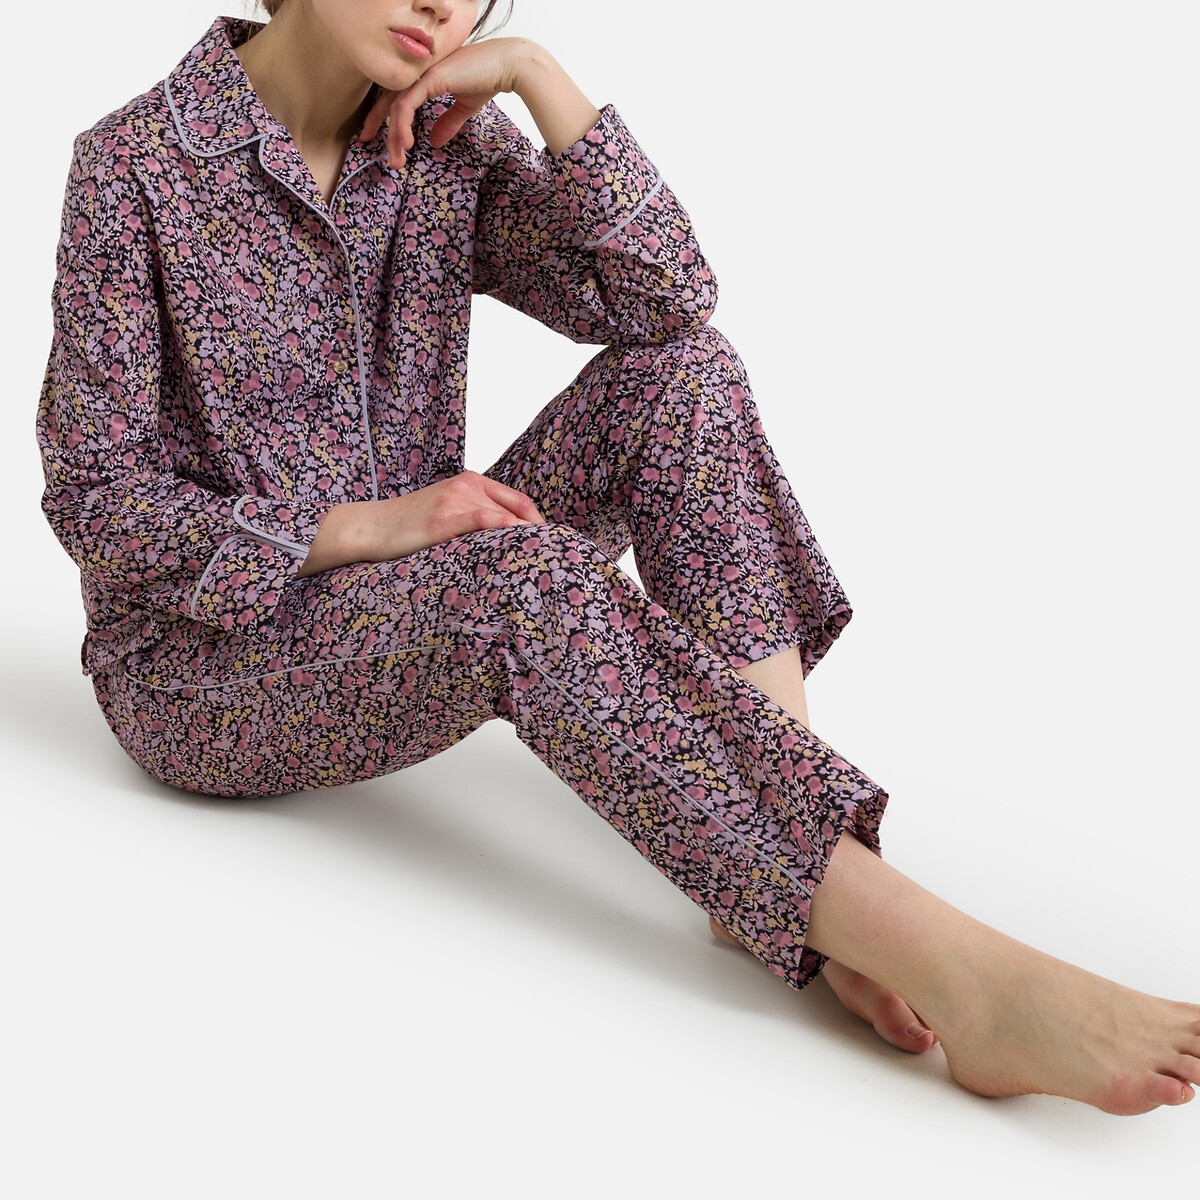 Joe Cotton Pyjama Top in Floral Print